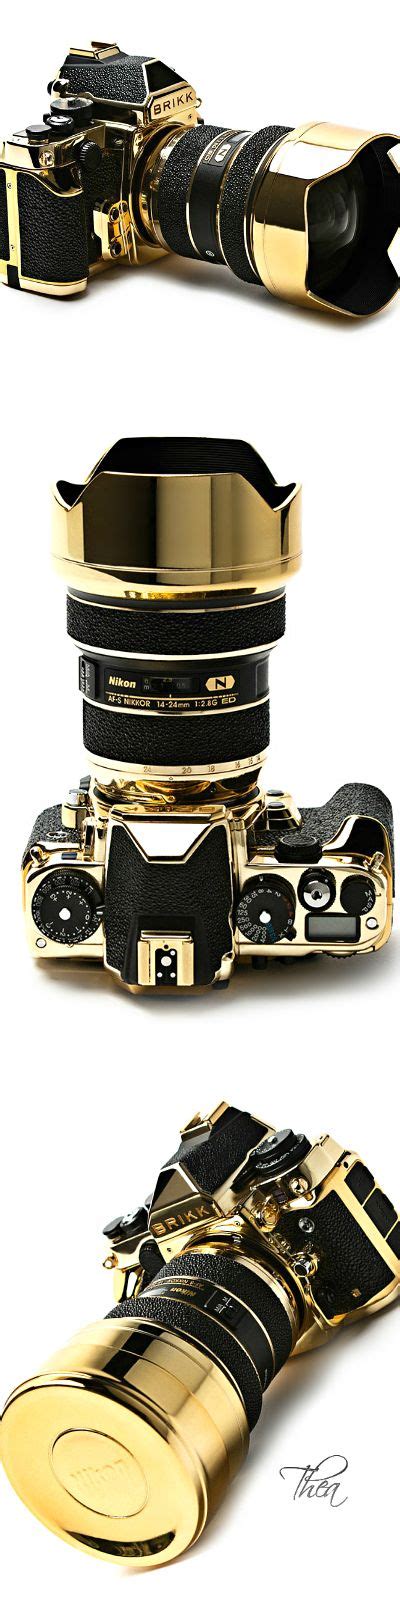 Brikk 24k Gold And Stingray Lux Nikon Df Camera 58000 Nikon Df Camera